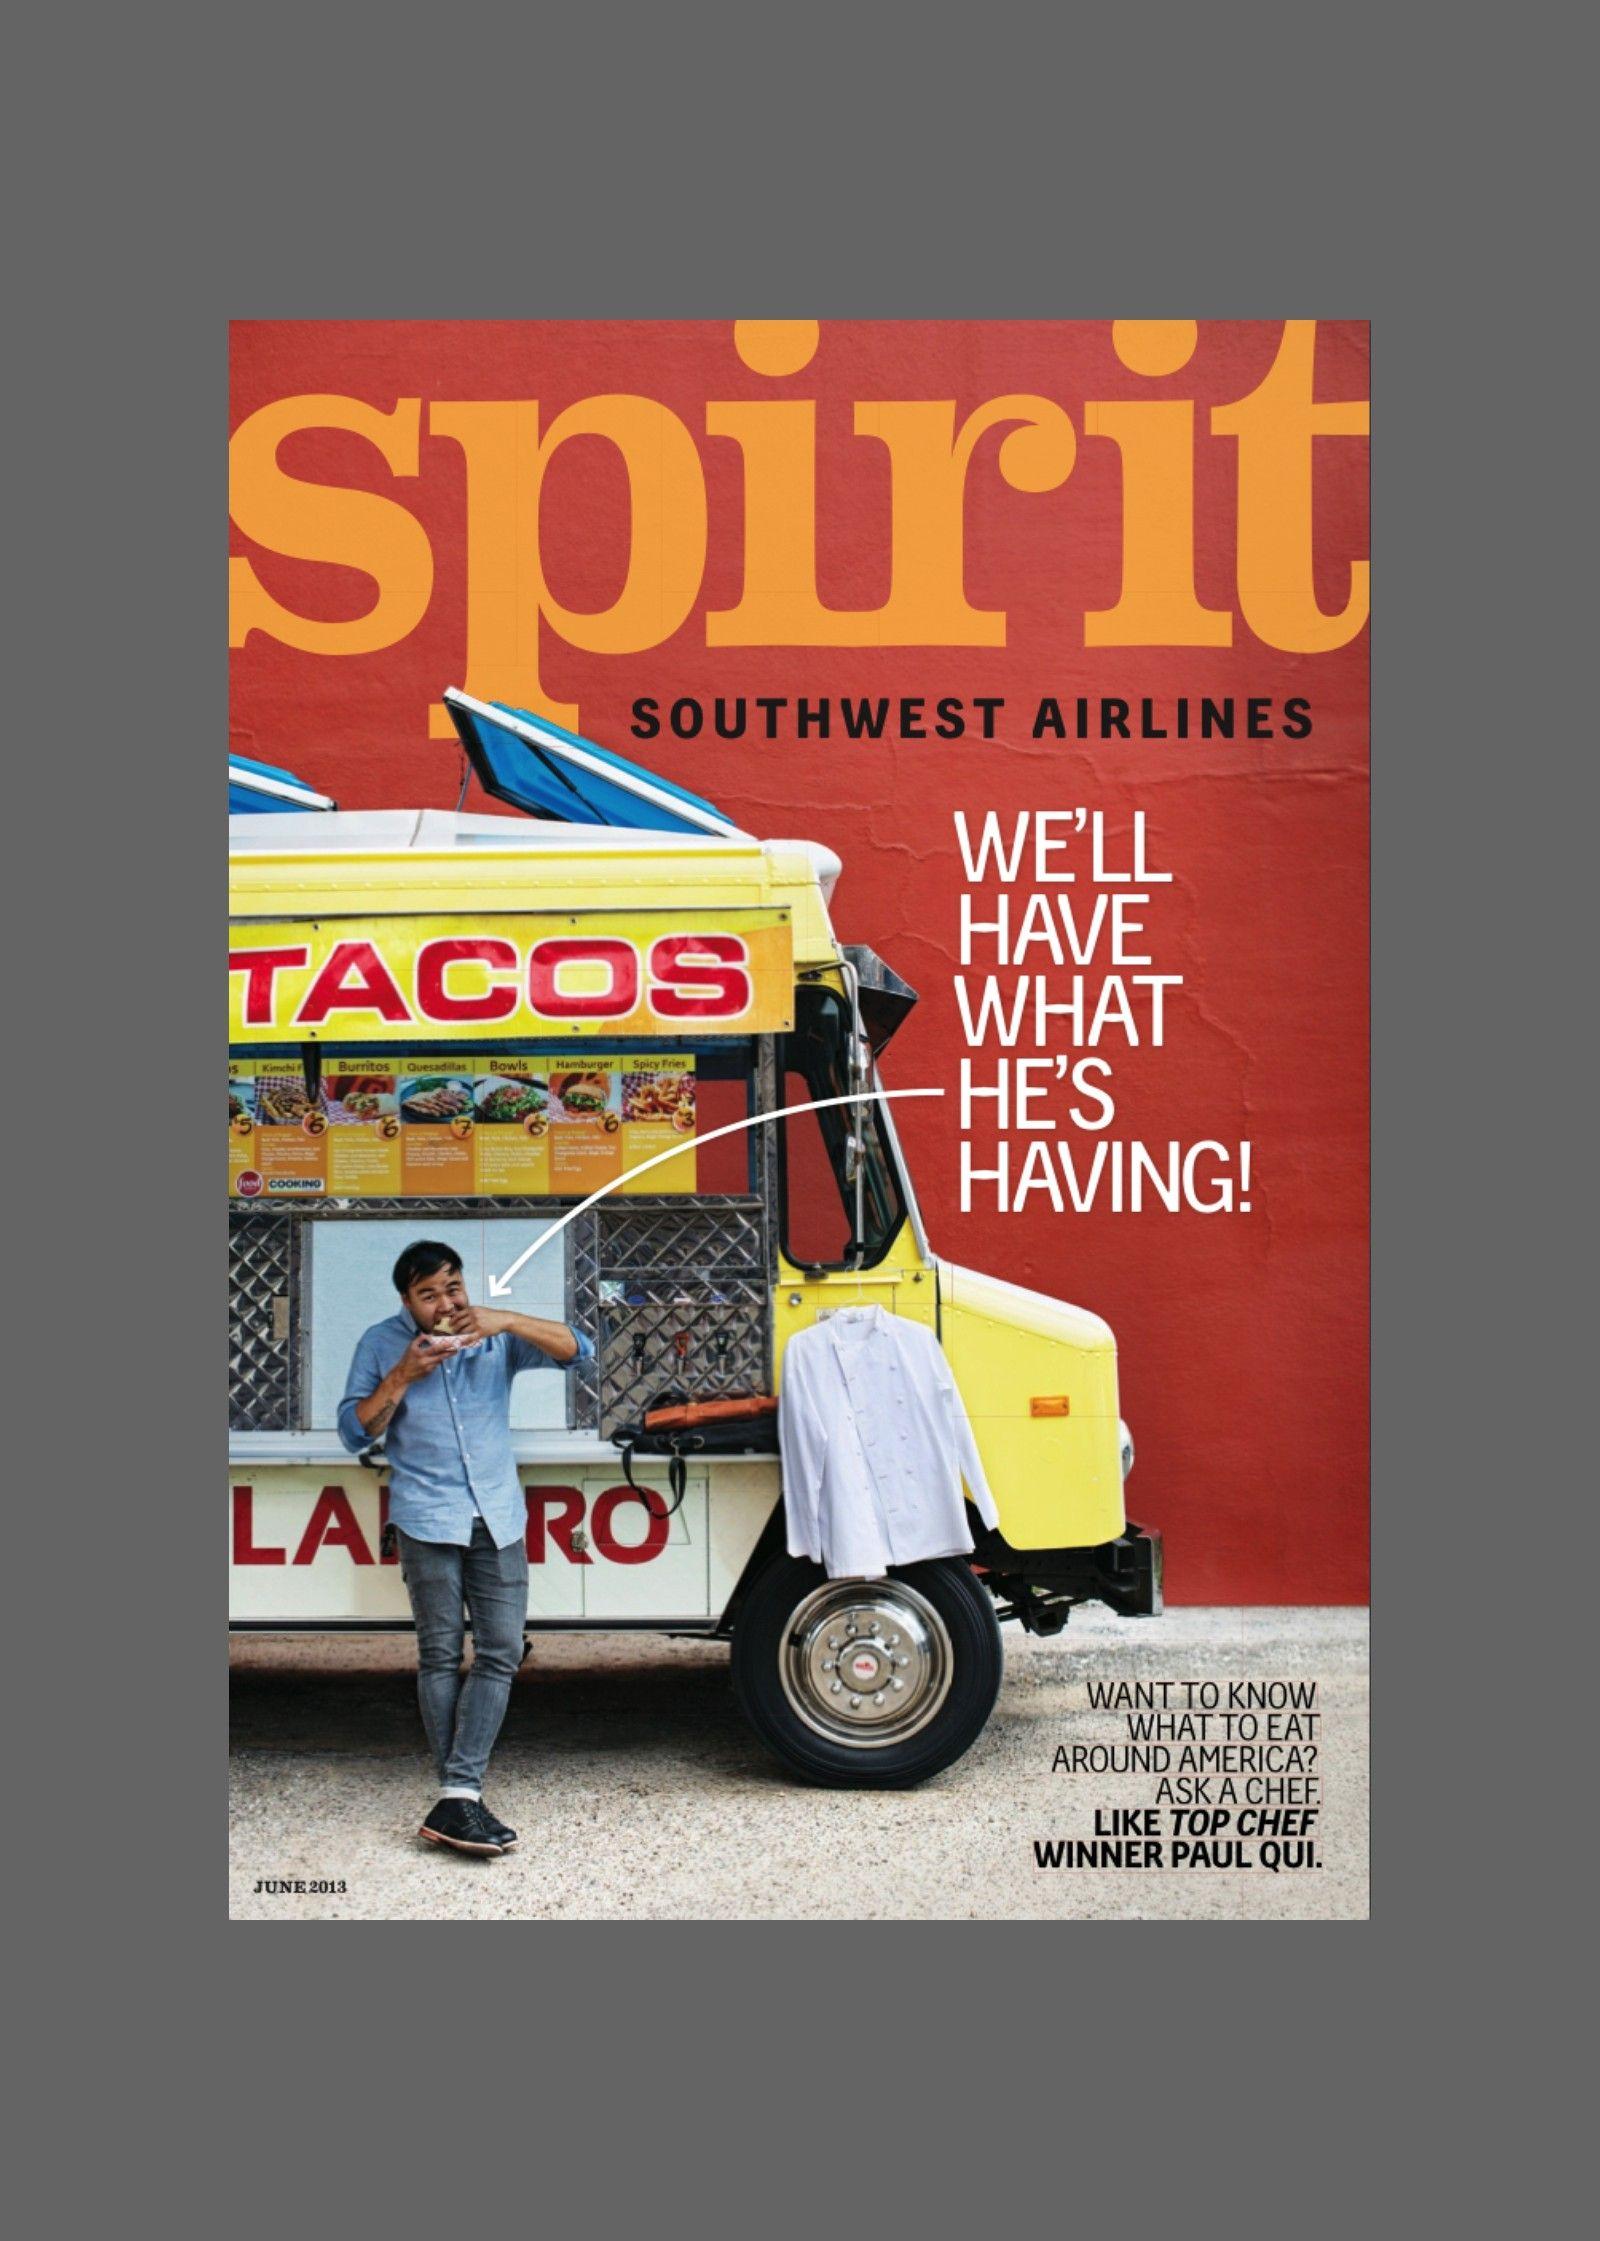 Southwest Airlines Magazine Logo - Nice and colorfull. Southwest Airlines Magazine cover | be inspired ...